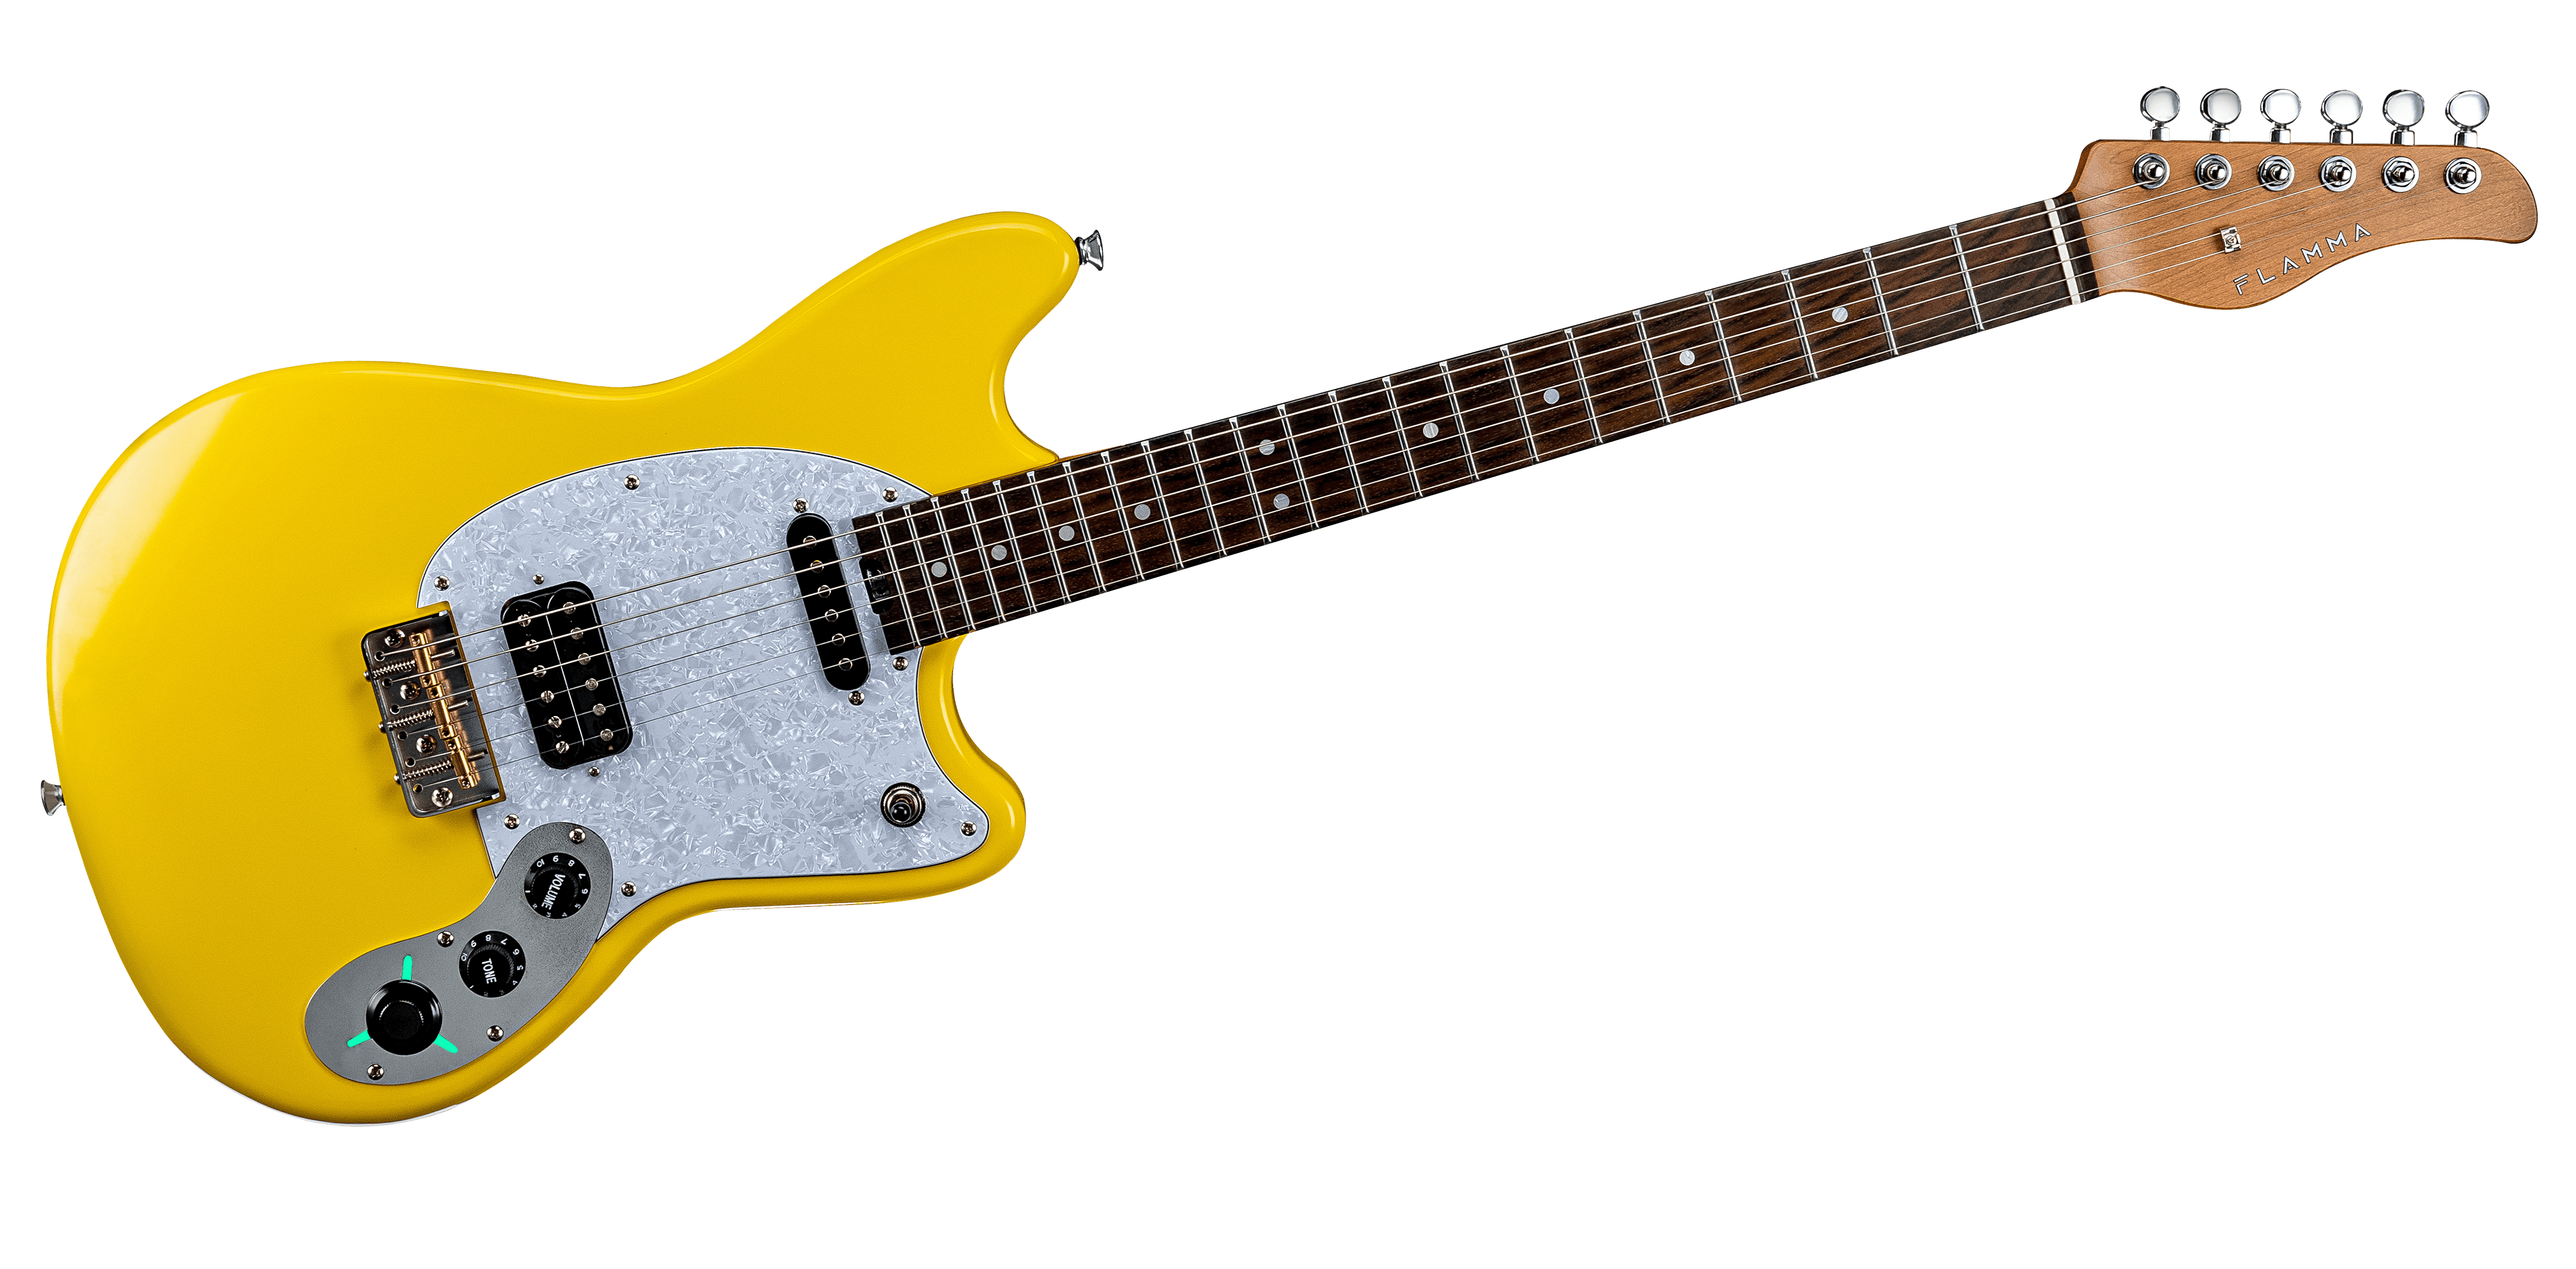 FLAMMA Intelligent Guitar E1000